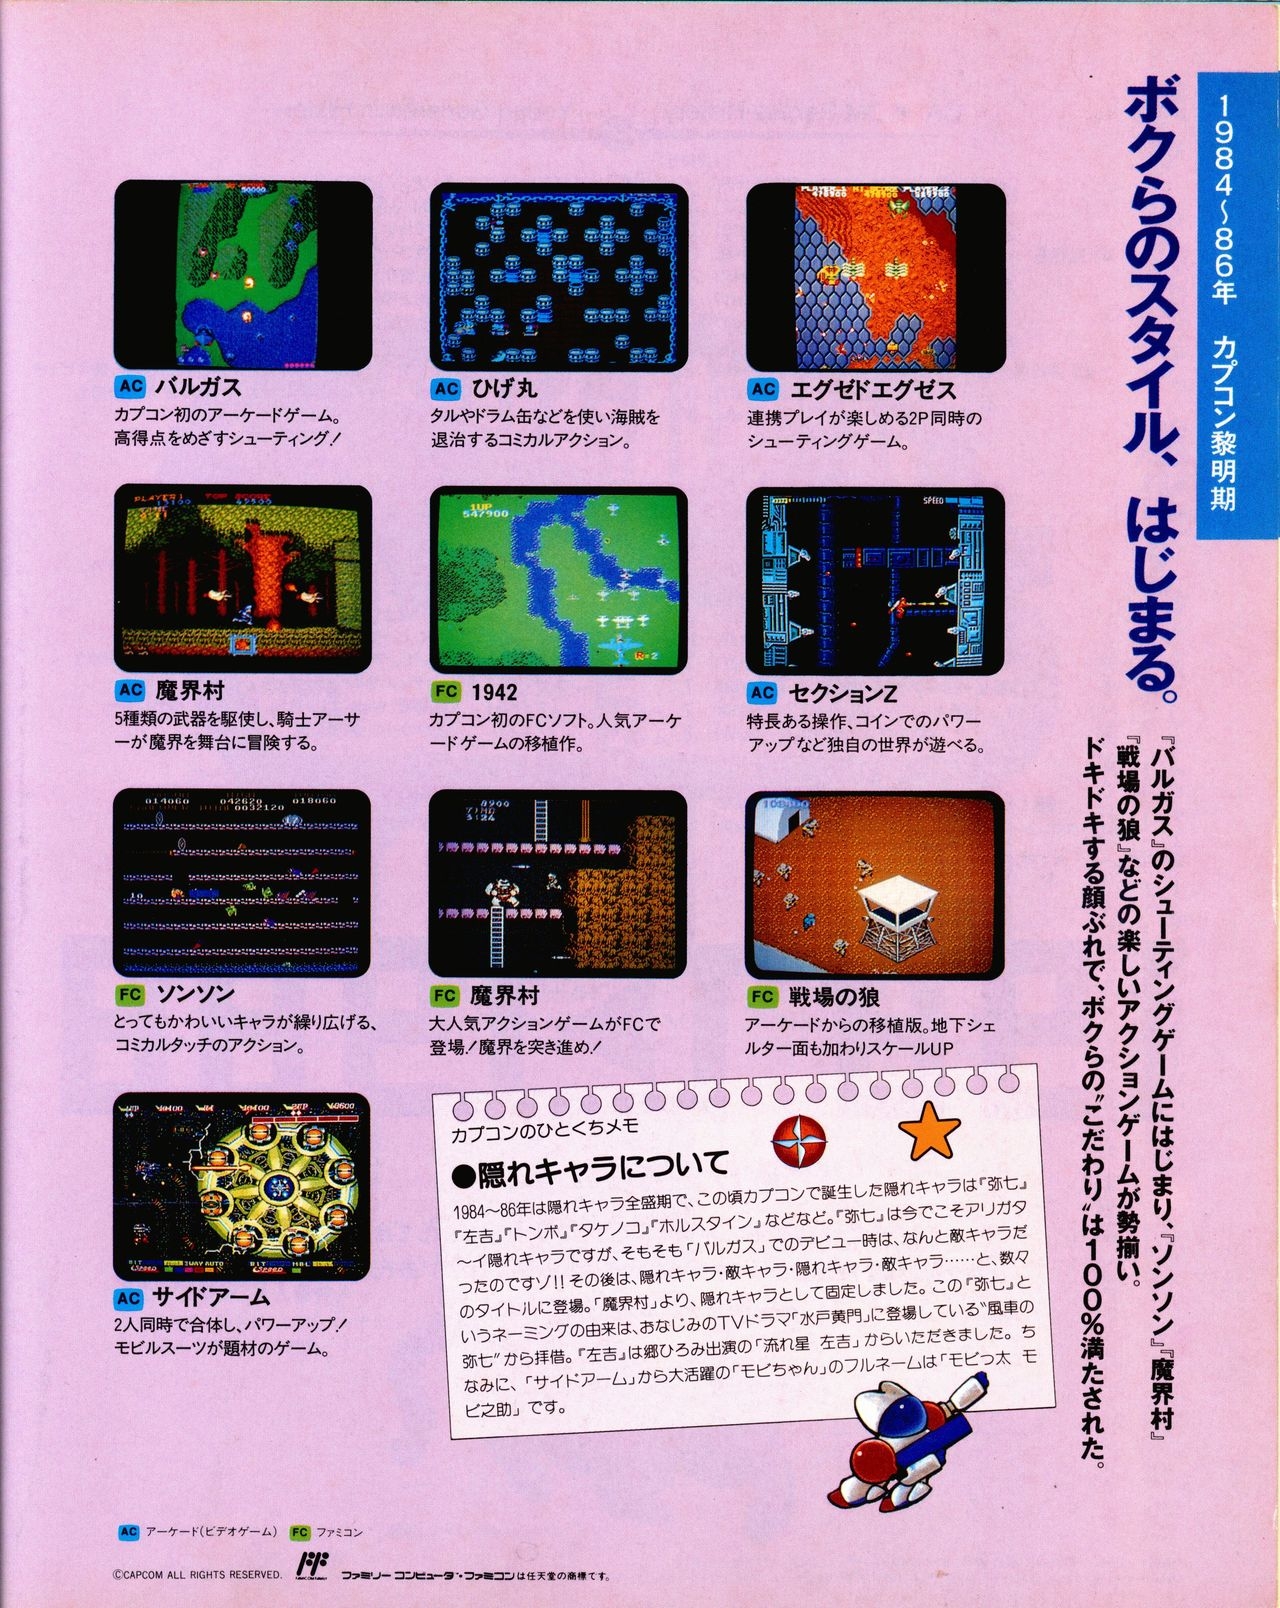 Street Fighter II Dash - Gamest special issue 77 161